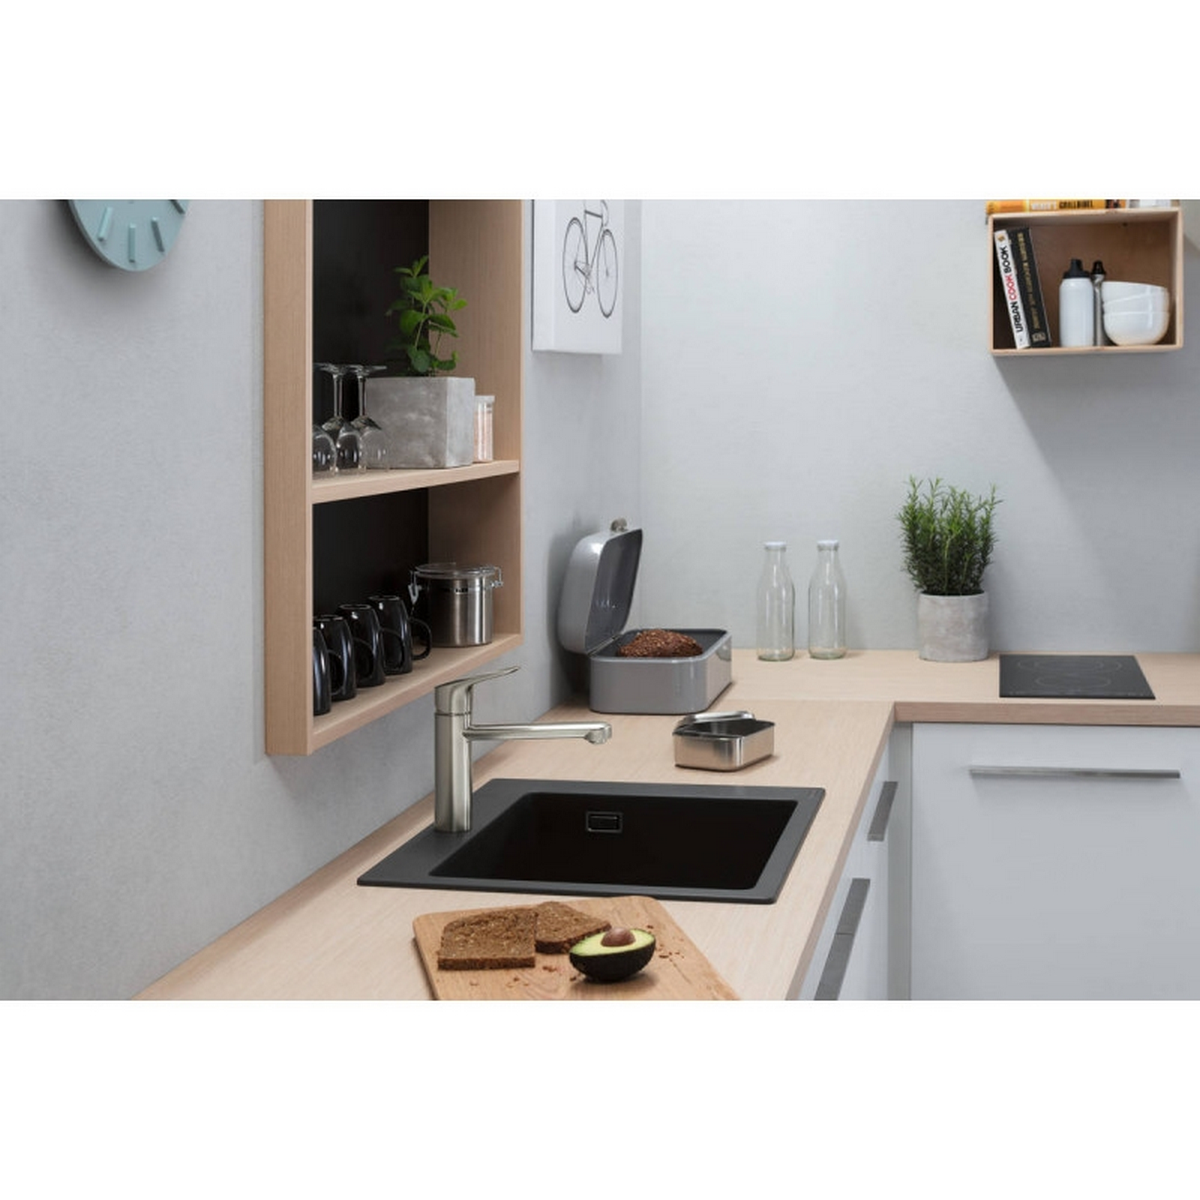 Кухонная мойка Hansgrohe S51 S510-F450 43312170 цена 17045.10 грн - фотография 2